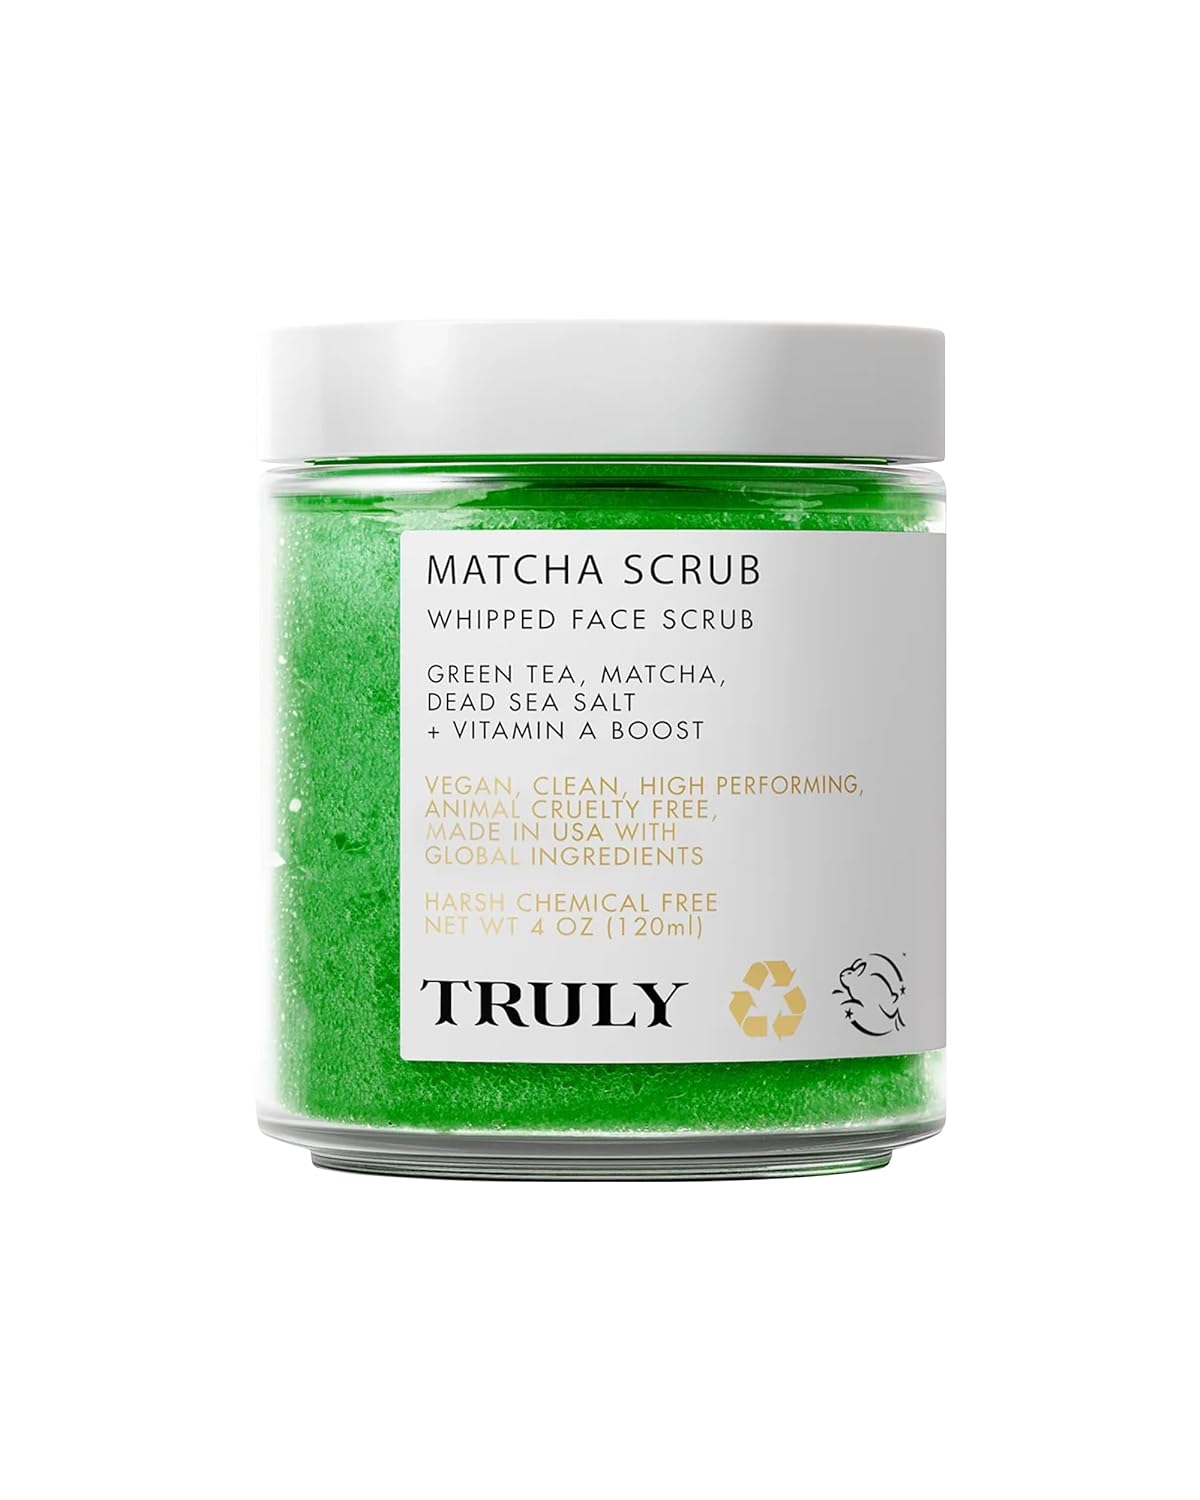 Truly Beauty Matcha Scrub Review